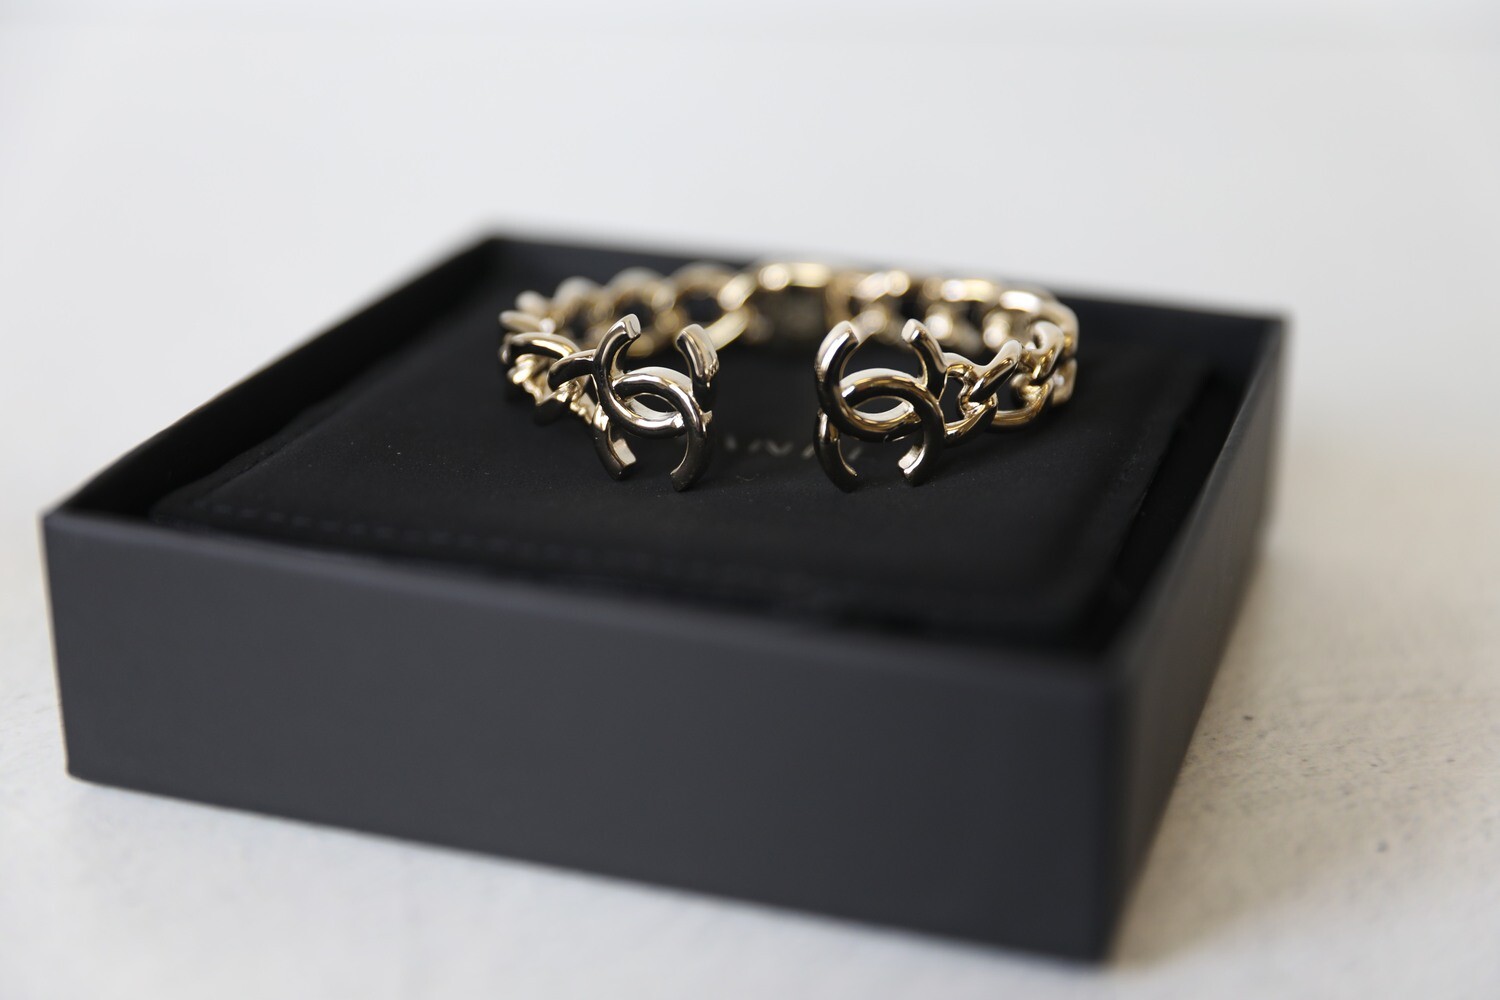 Chanel Cuff Bracelet, Golden, New in Box WA001